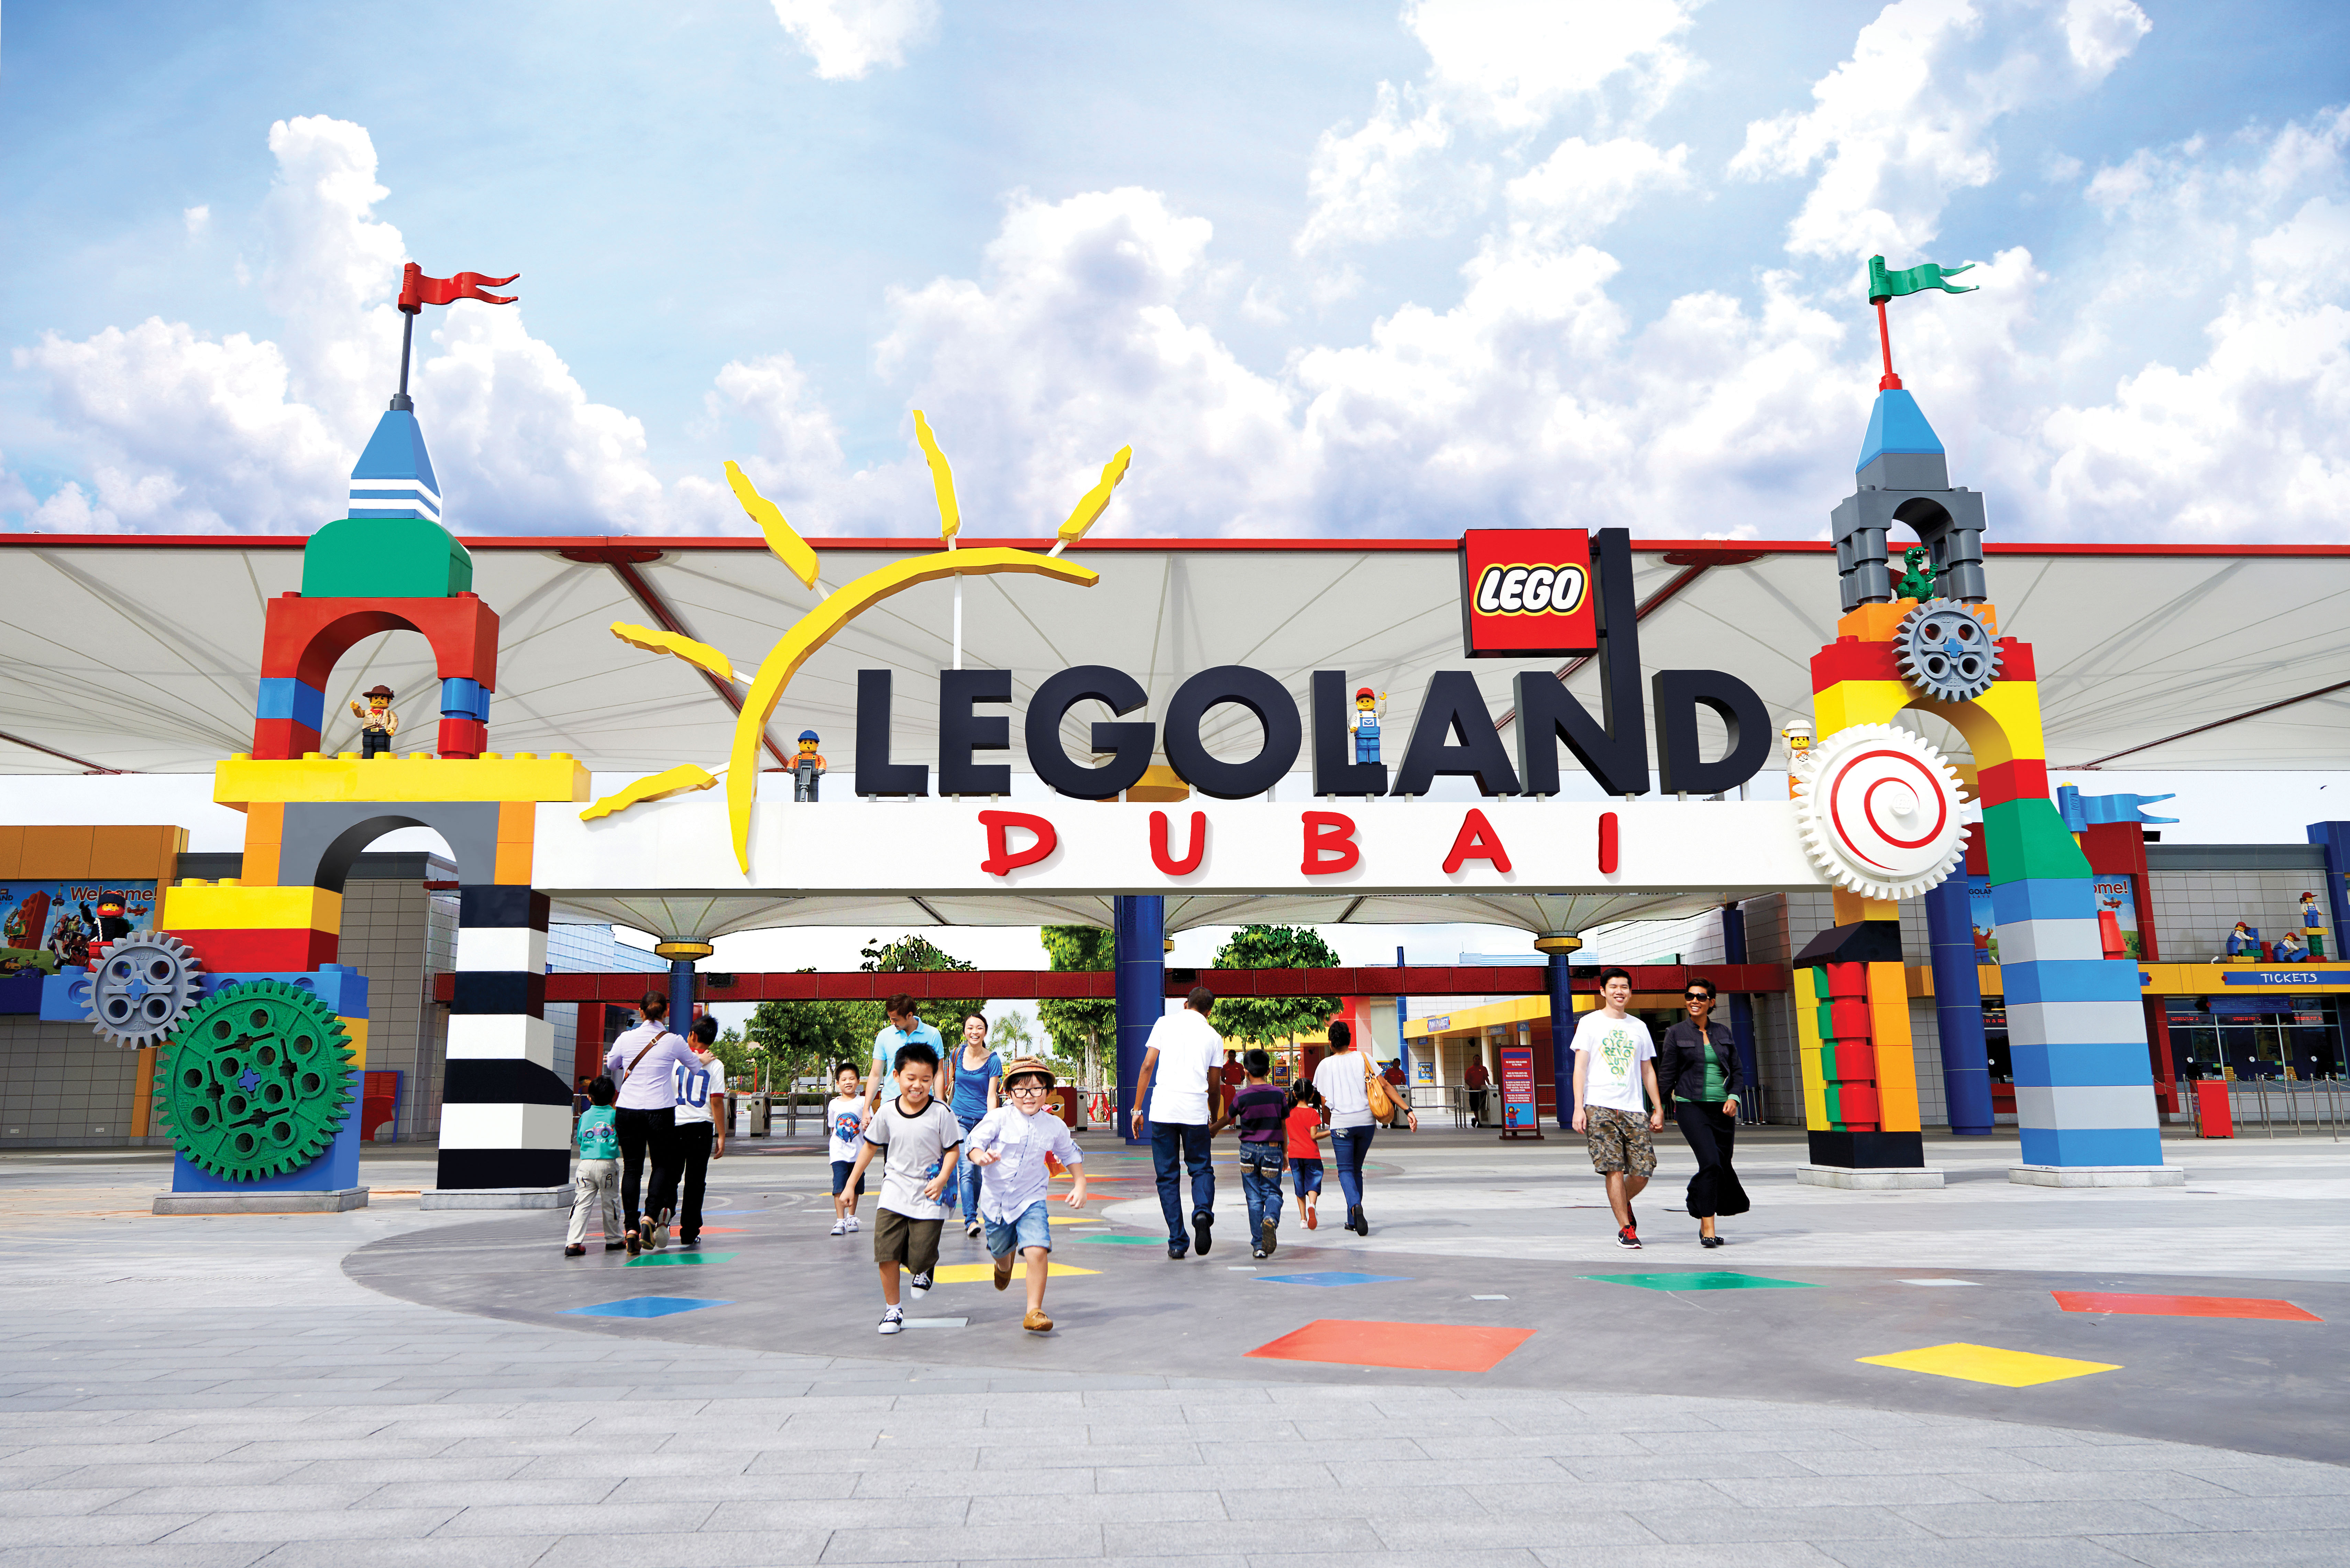 We could do it all at Legoland Dubai